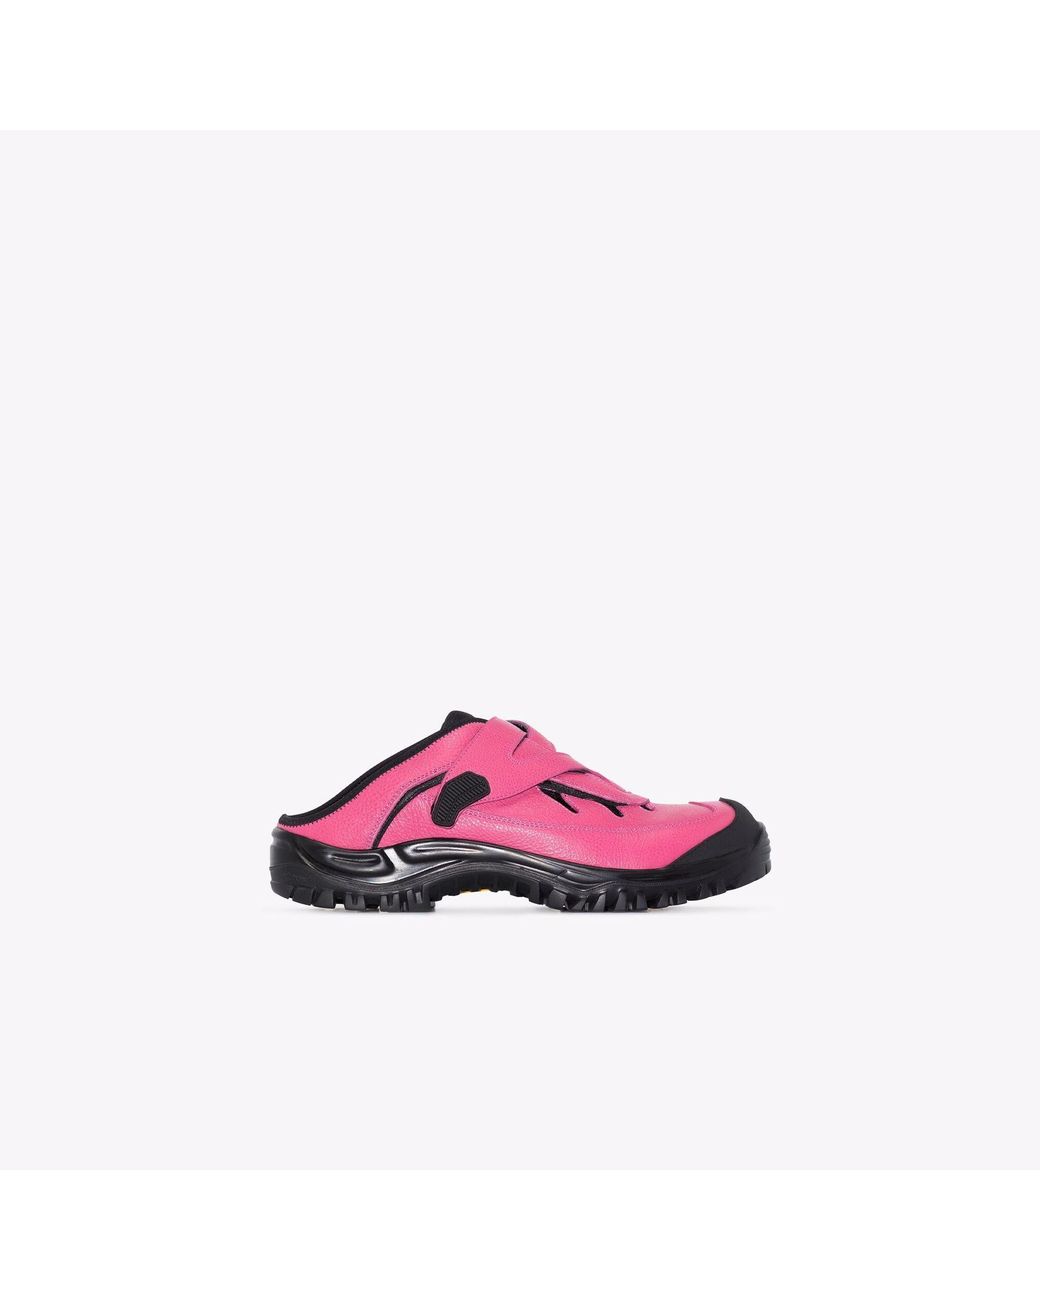 Kiko Kostadinov Wessex Sabo Slip-on Leather Sneakers in Pink for Men | Lyst